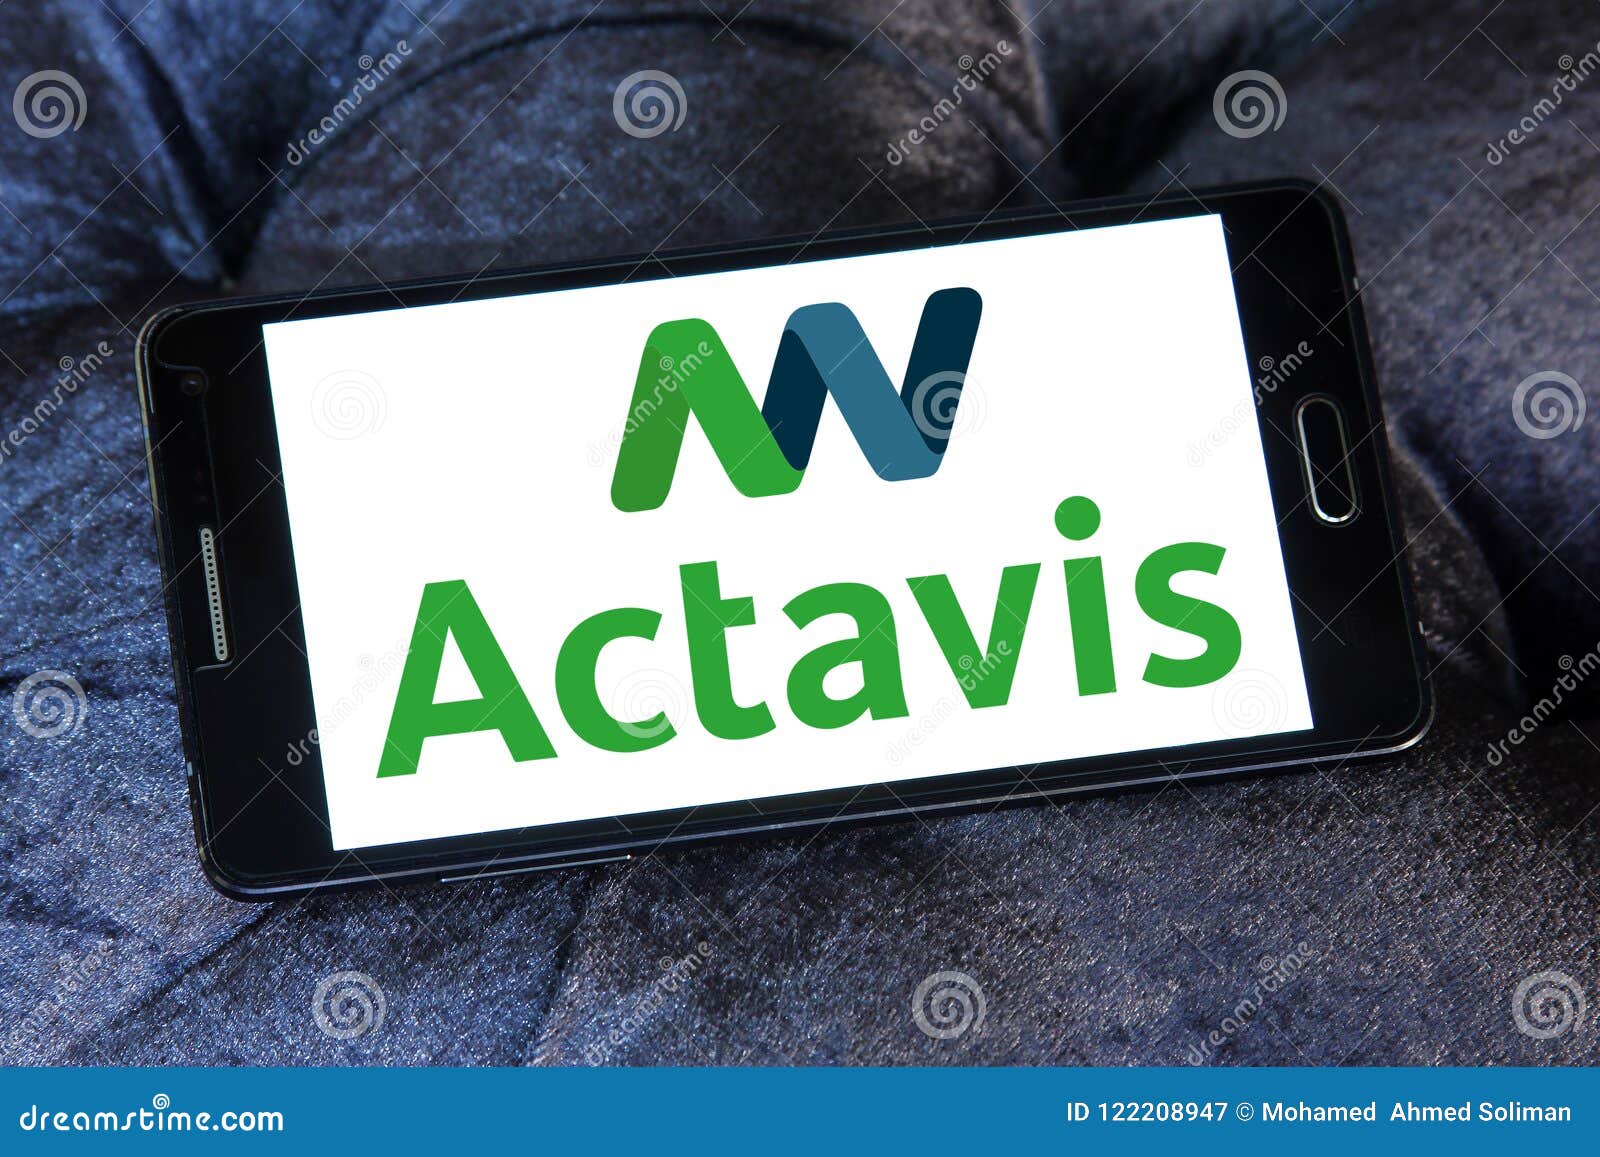 Actavis Generics Pharmaceuticals Company Logo Editorial Photography